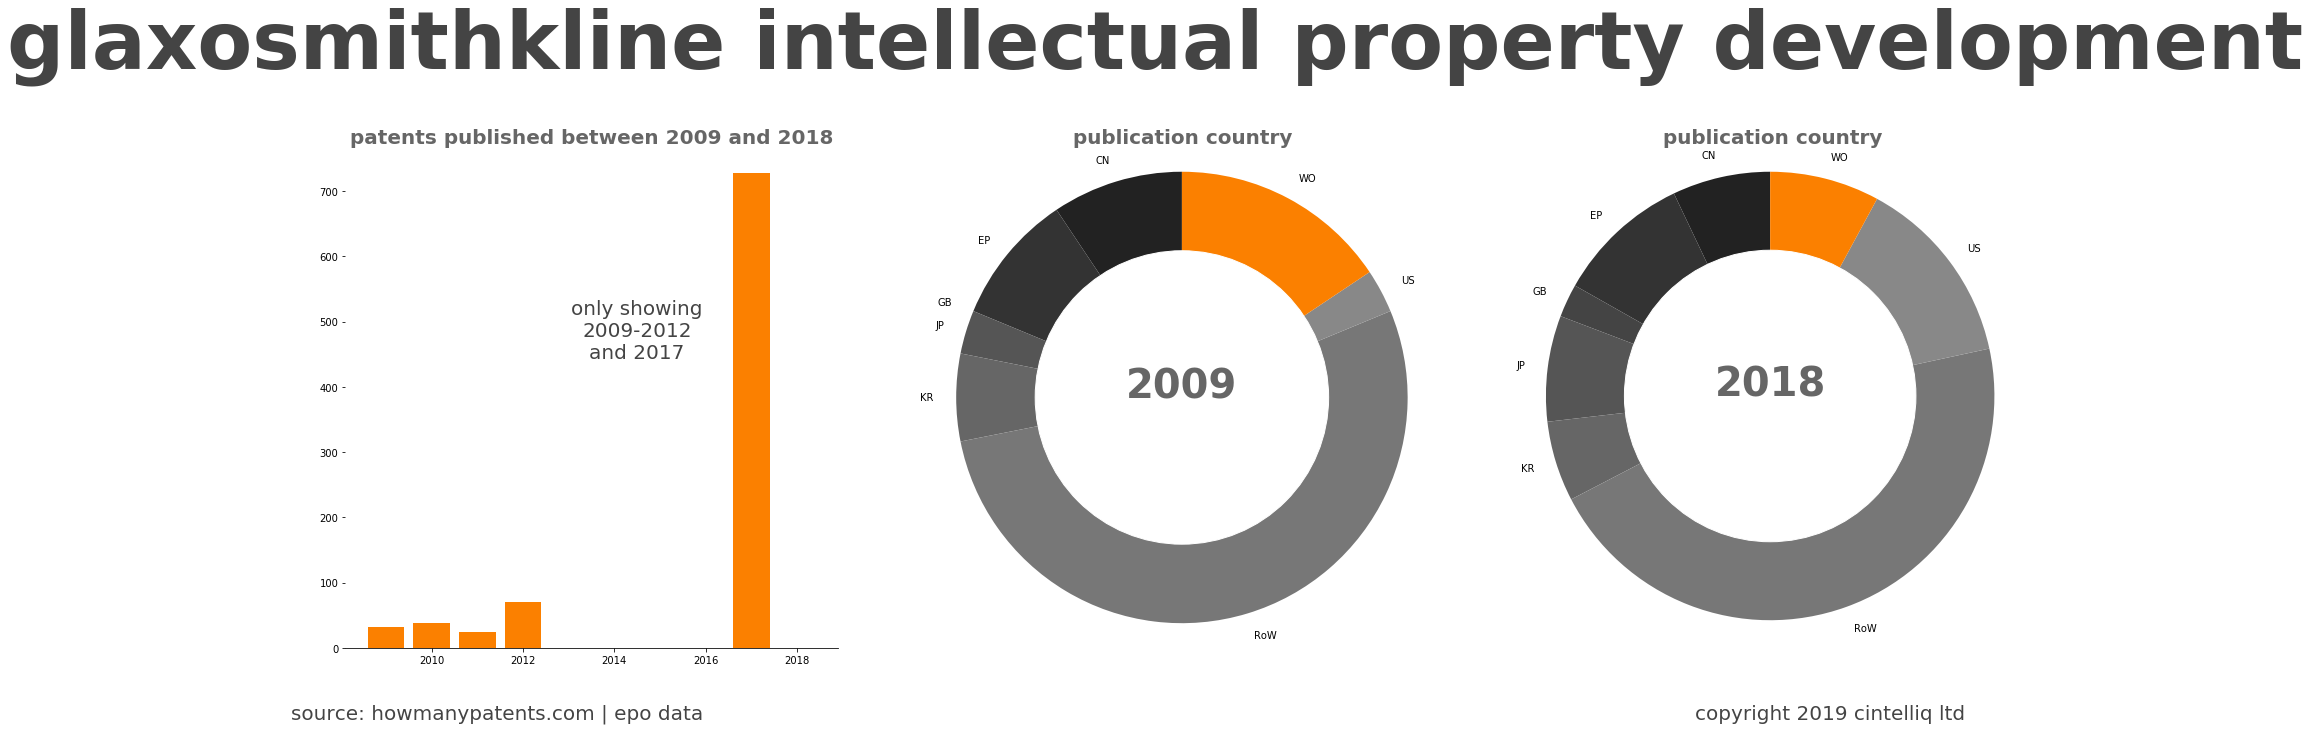 summary of patents for Glaxosmithkline Intellectual Property Development